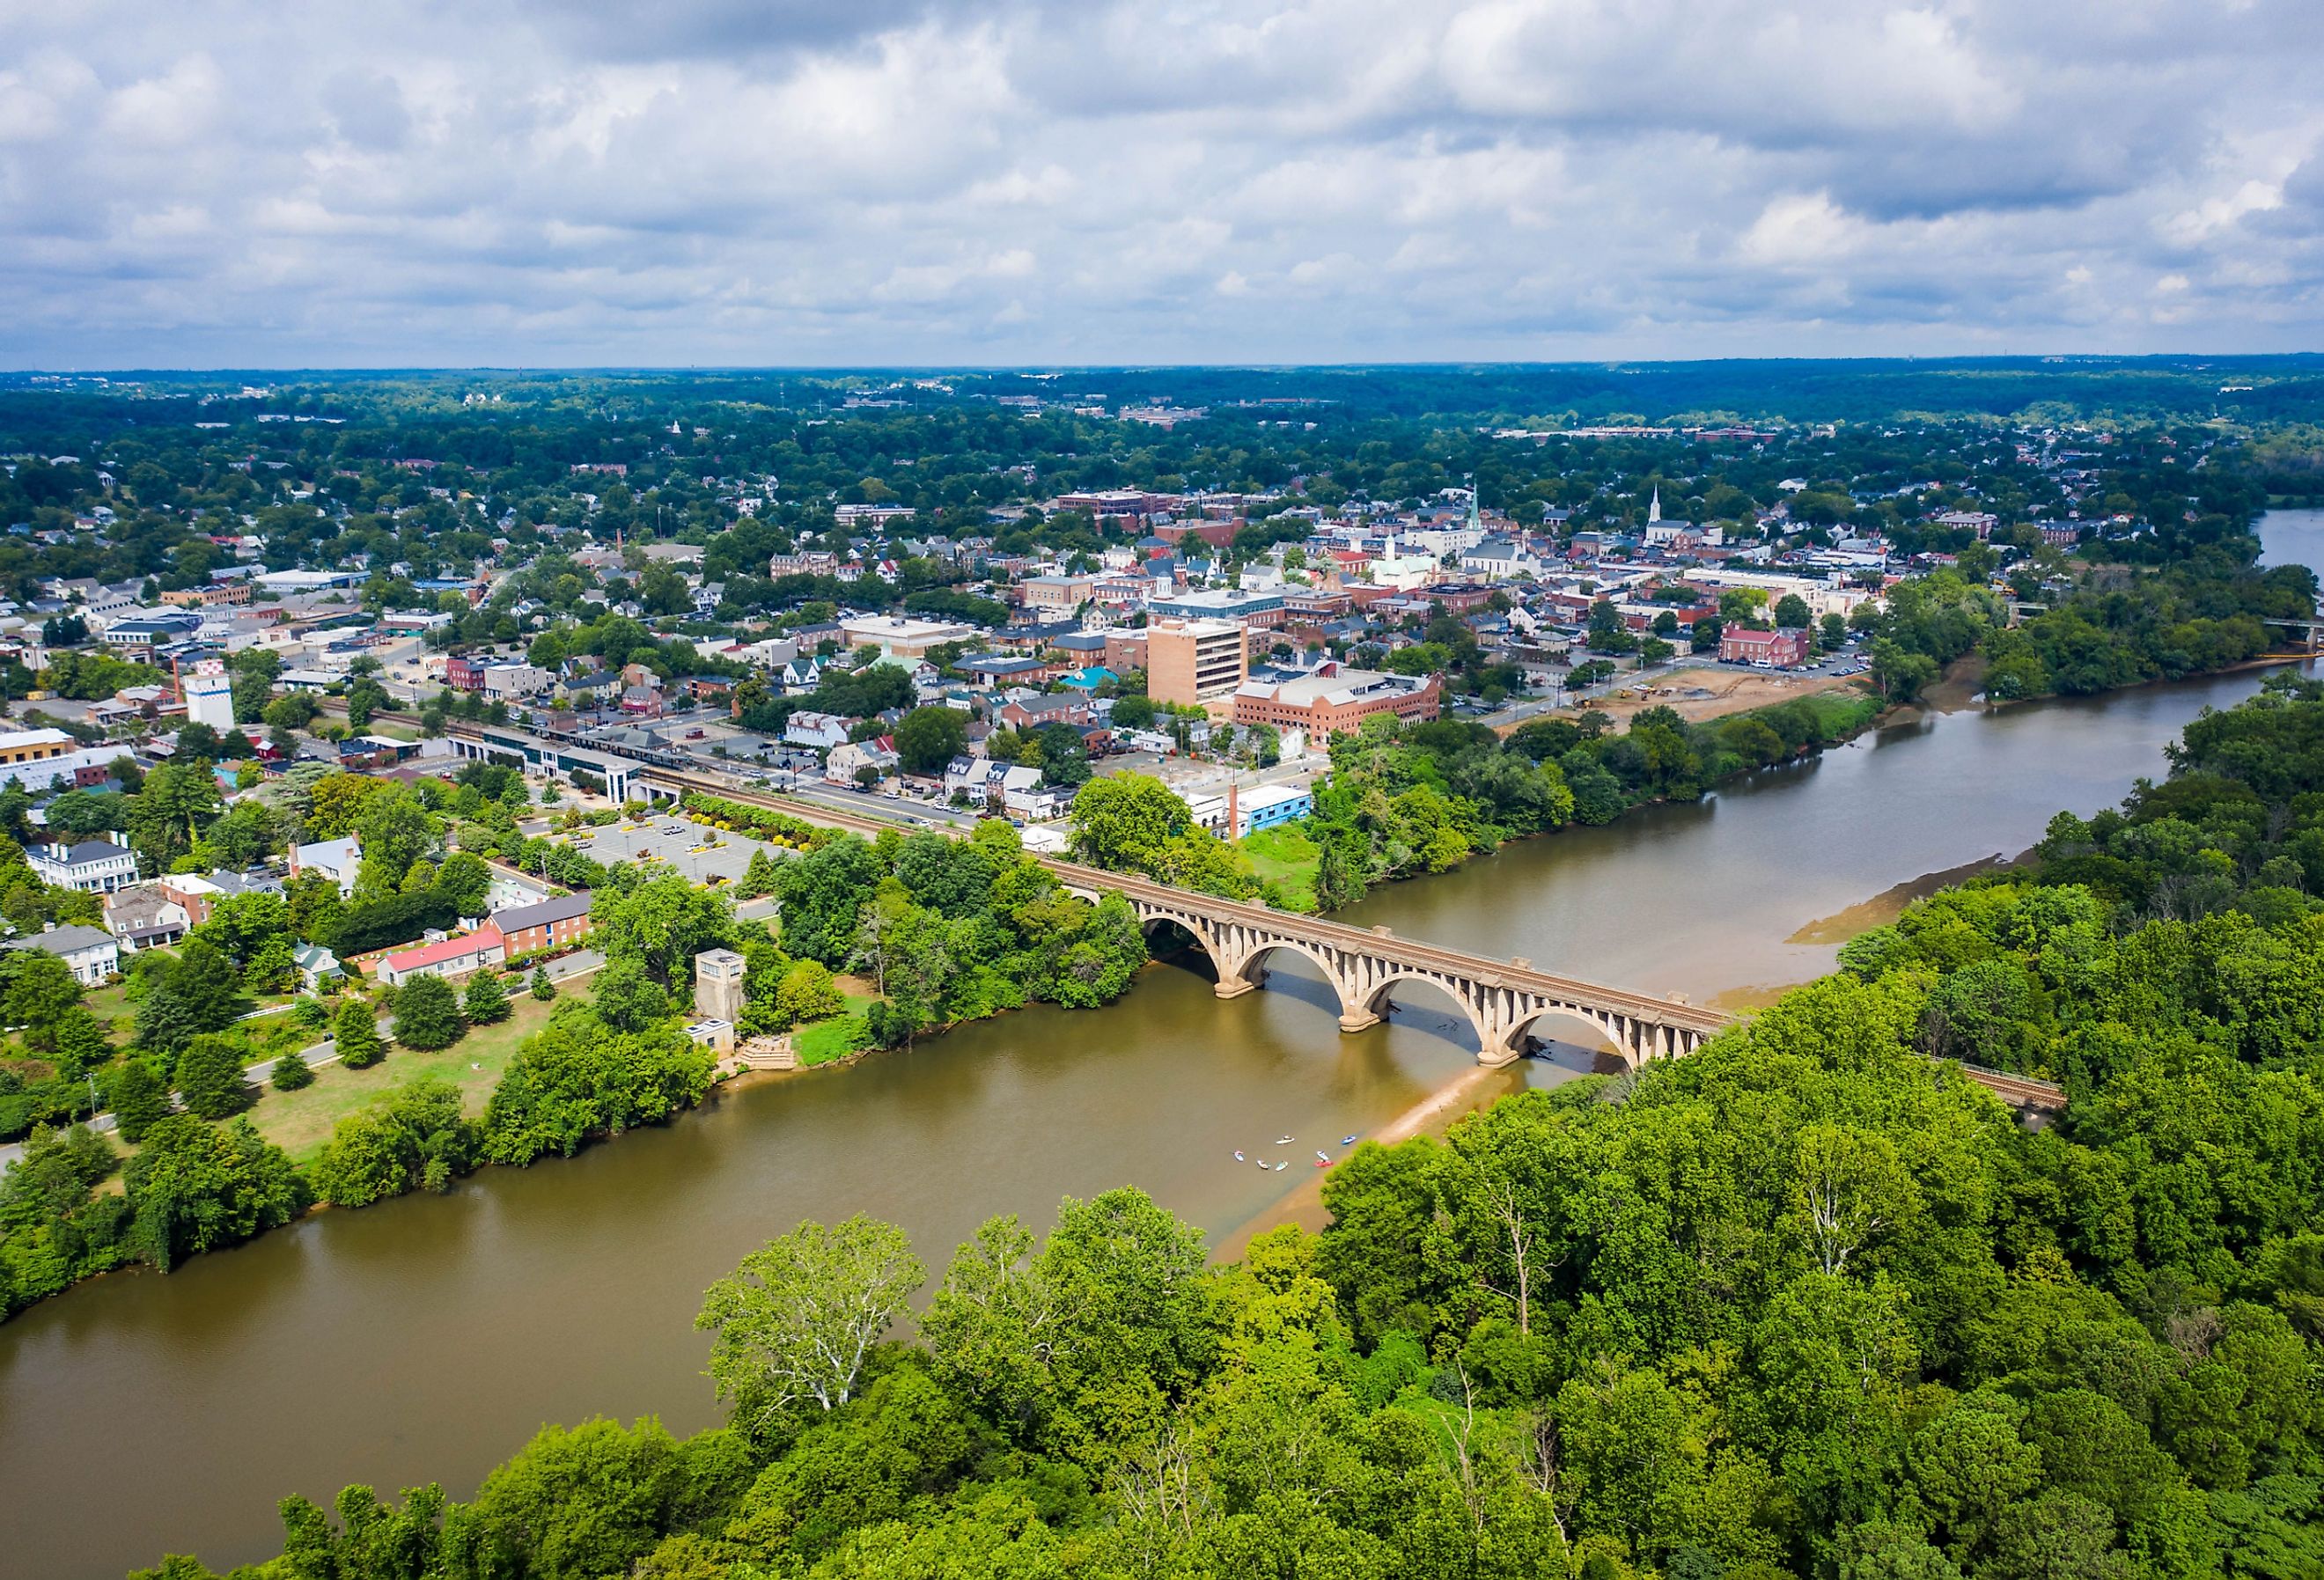 Aerial view of historic Fredericksburg, Virginia. Image credit Never Settle Media via Shutterstock